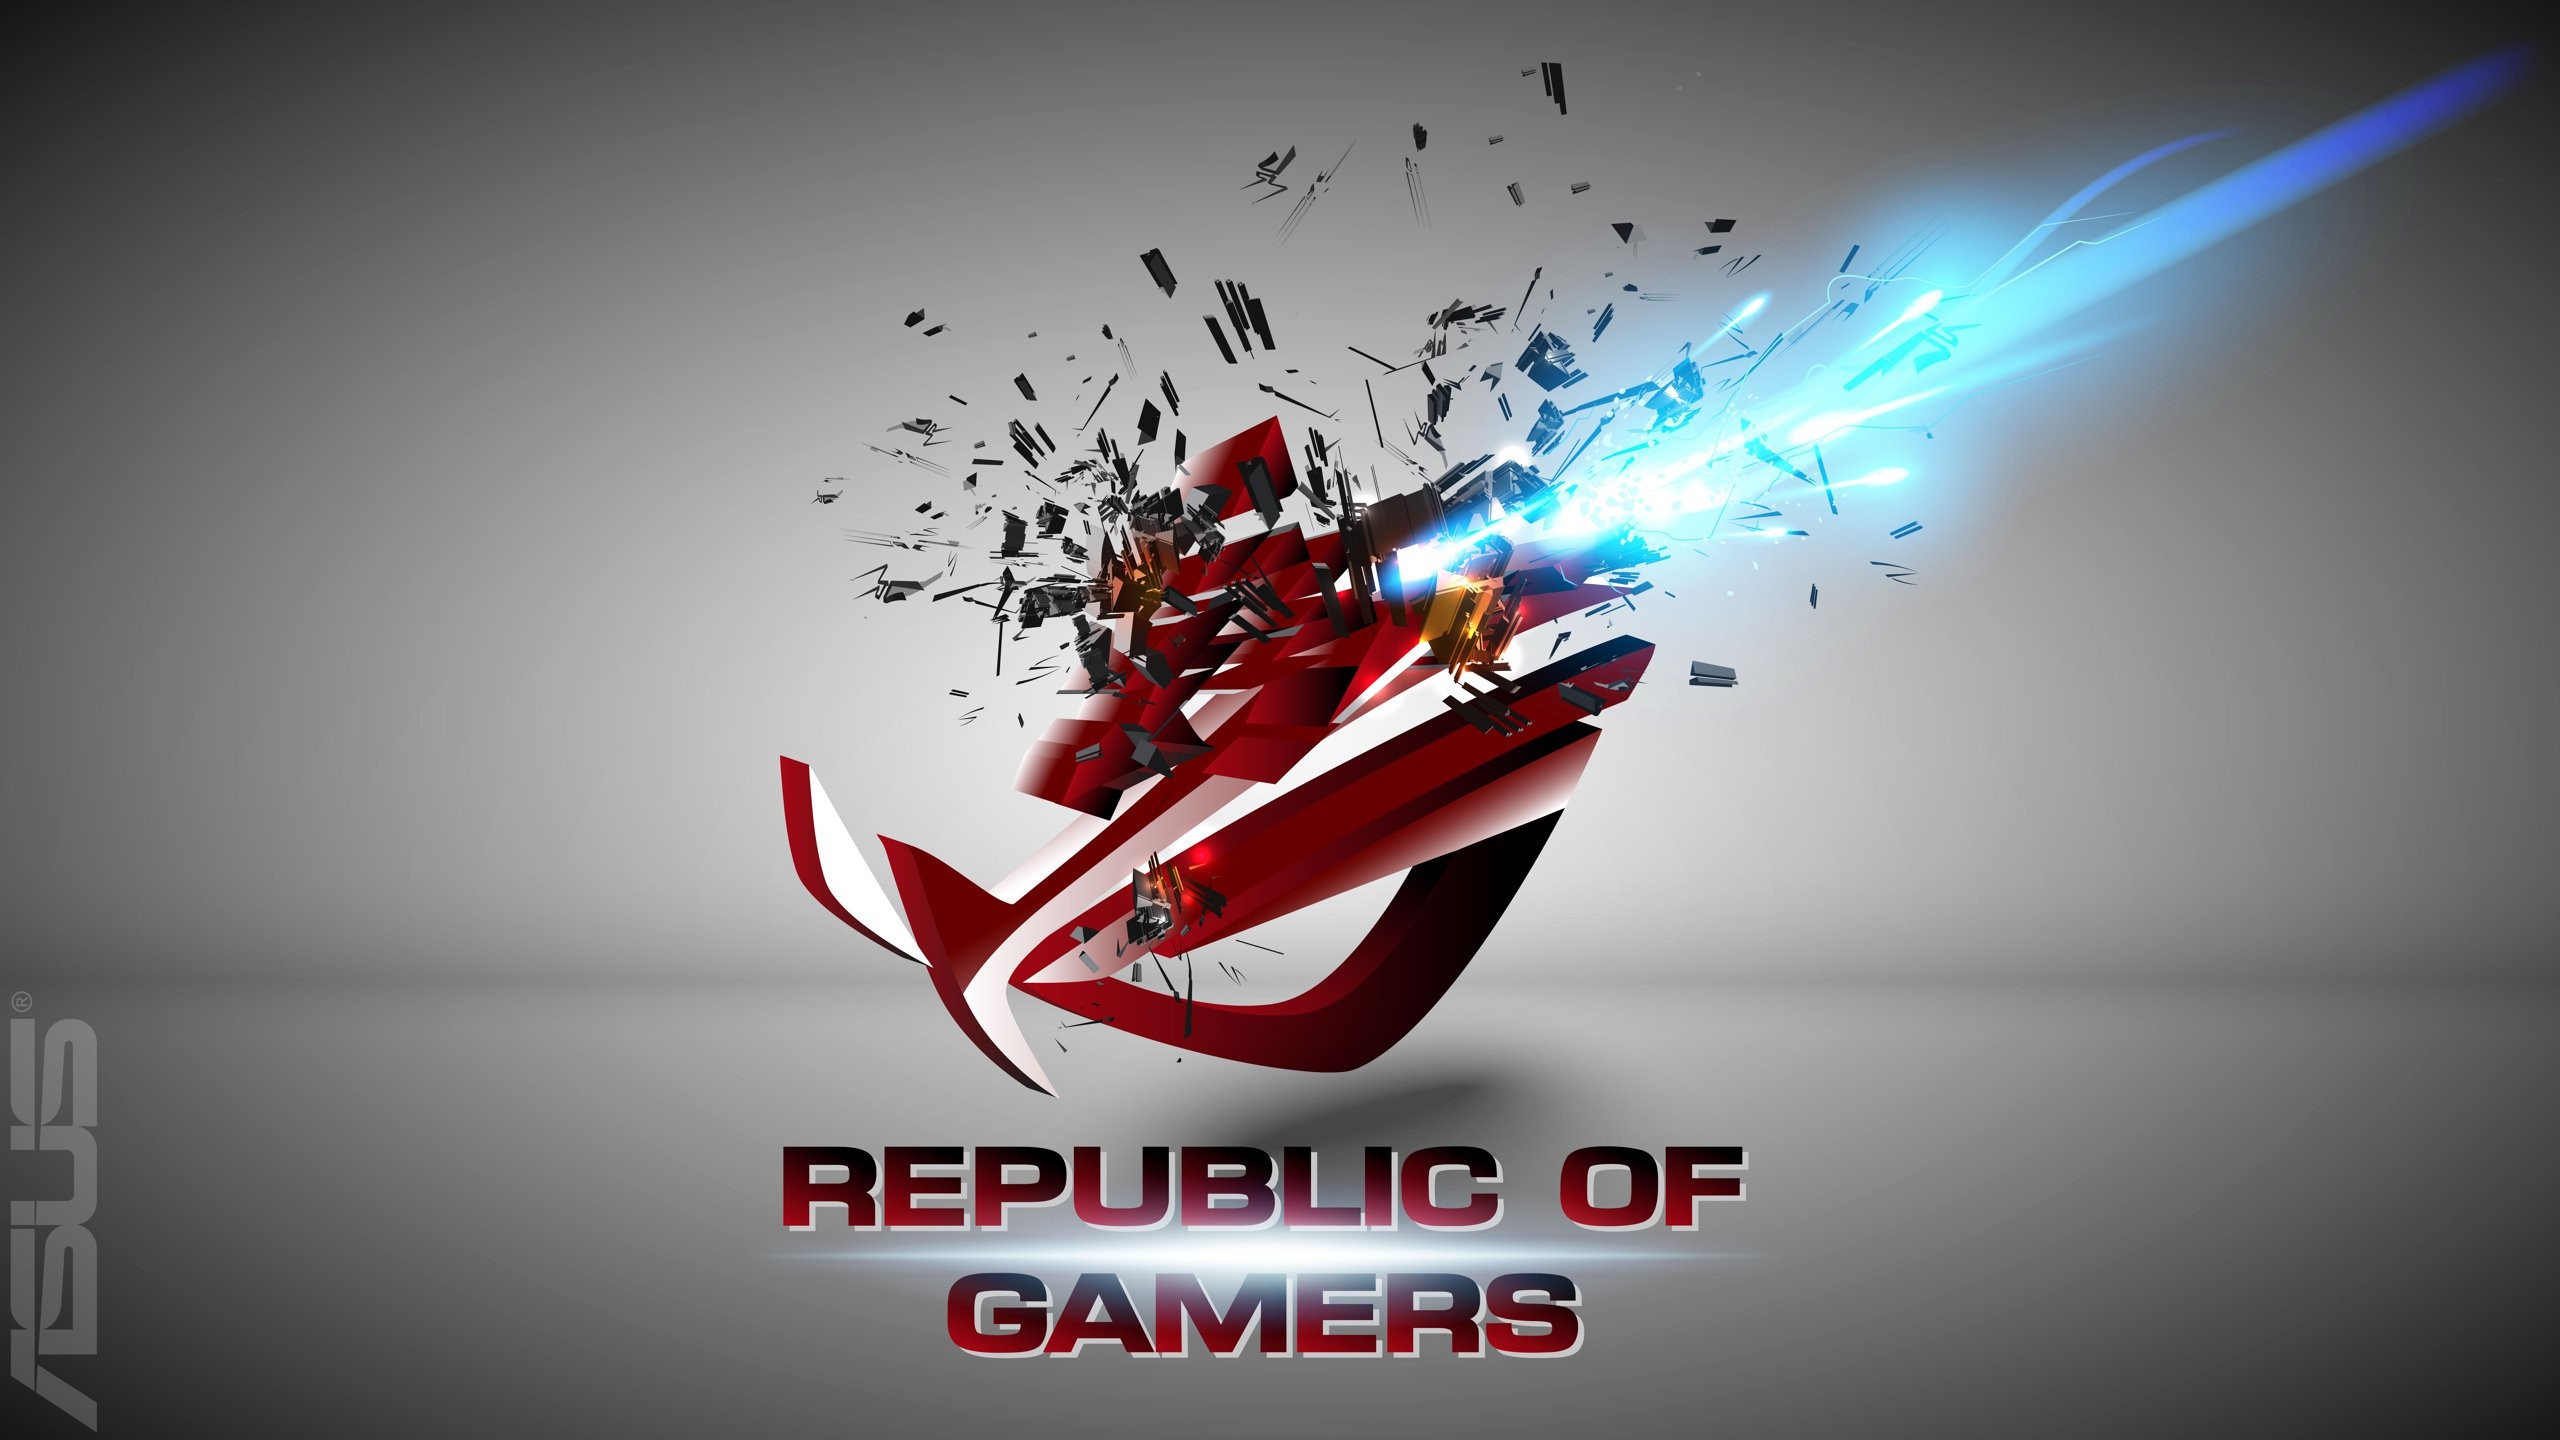 General 2560x1440 Republic of Gamers ASUS video games PC gaming